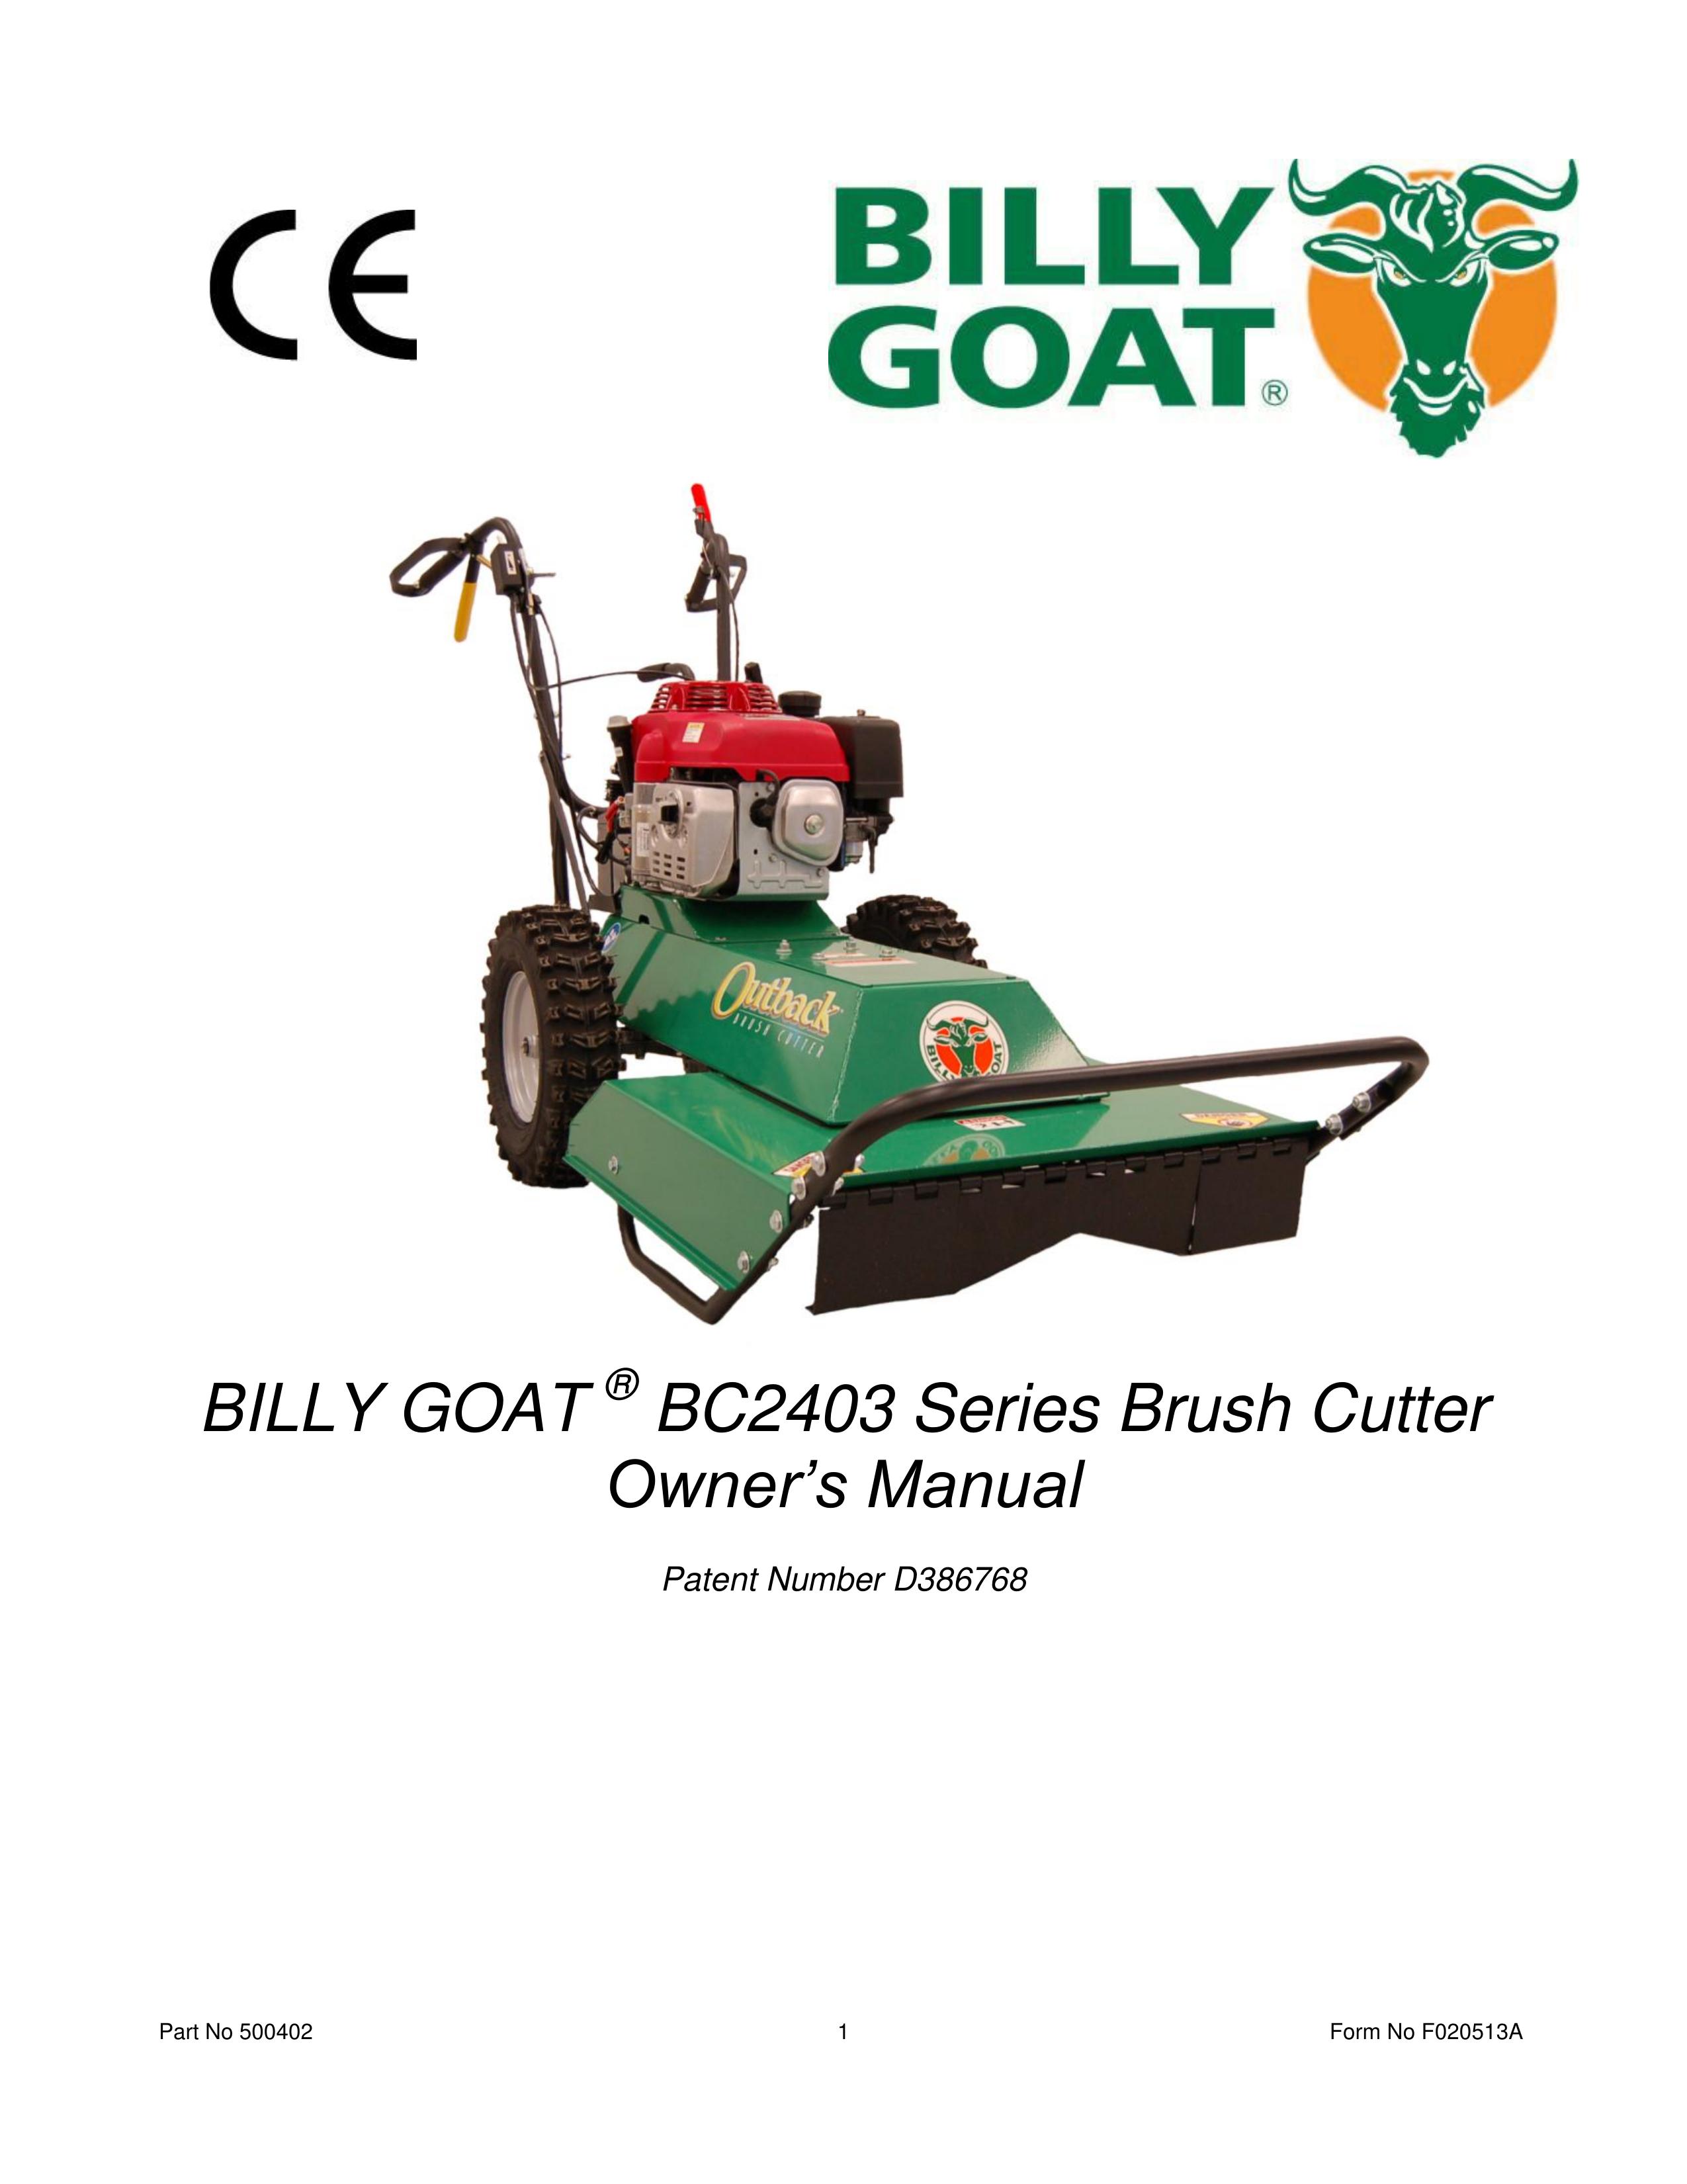 Billy Goat BC2403 Brush Cutter User Manual